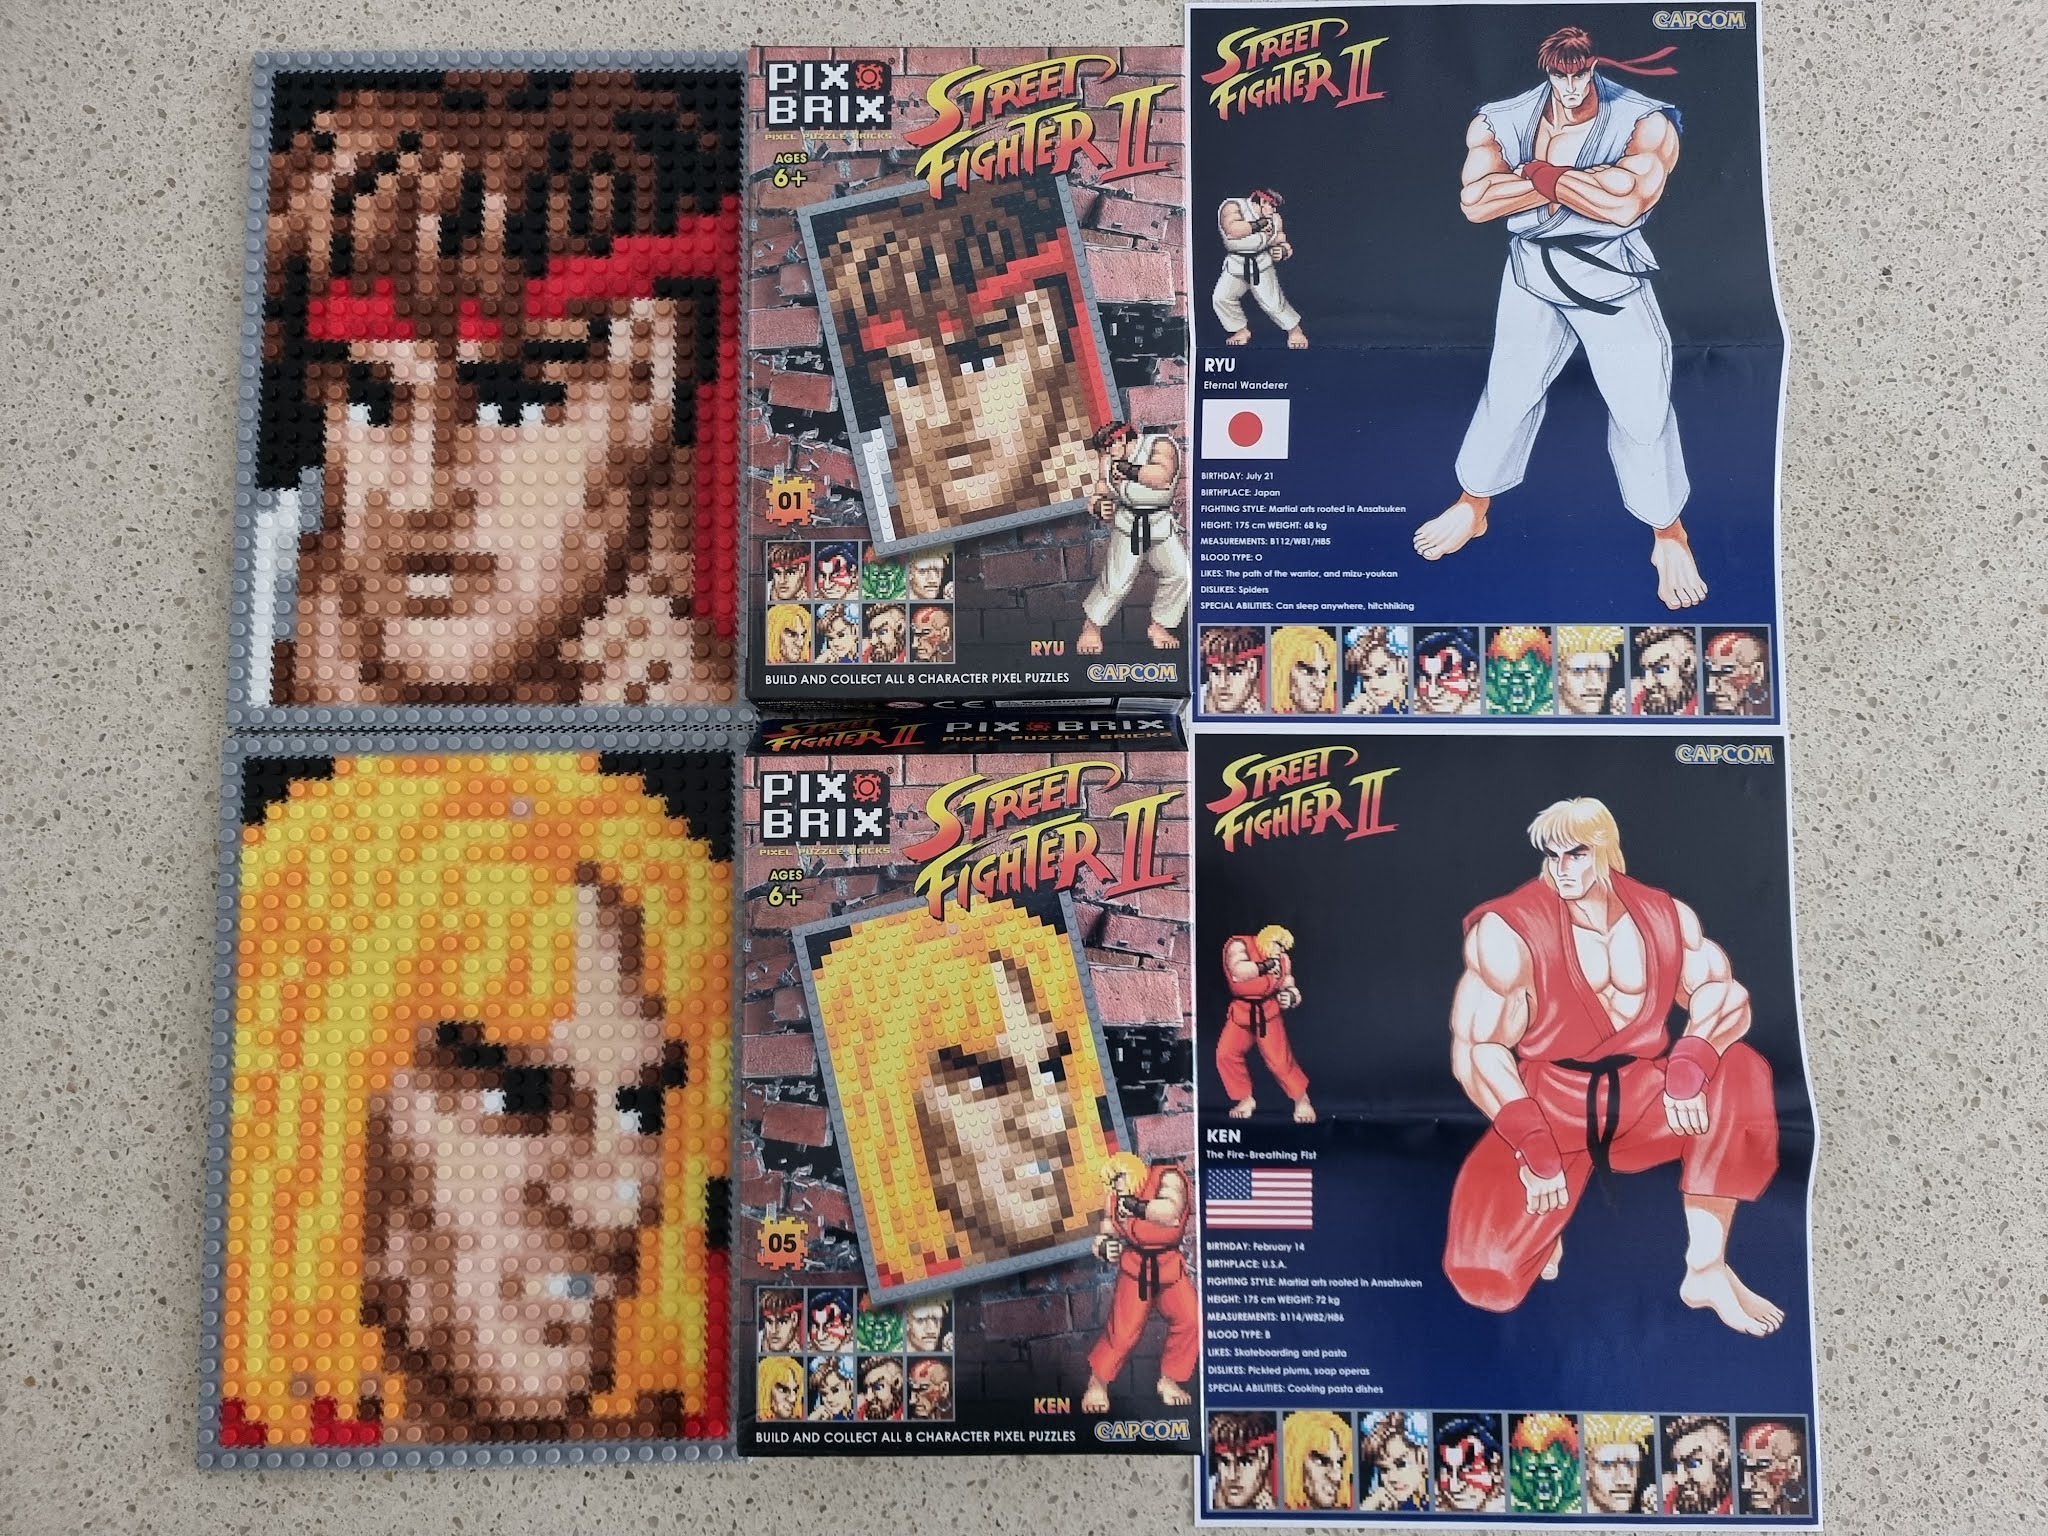  Pix Brix Street Fighter II Pixel Puzzle Bricks, Guile